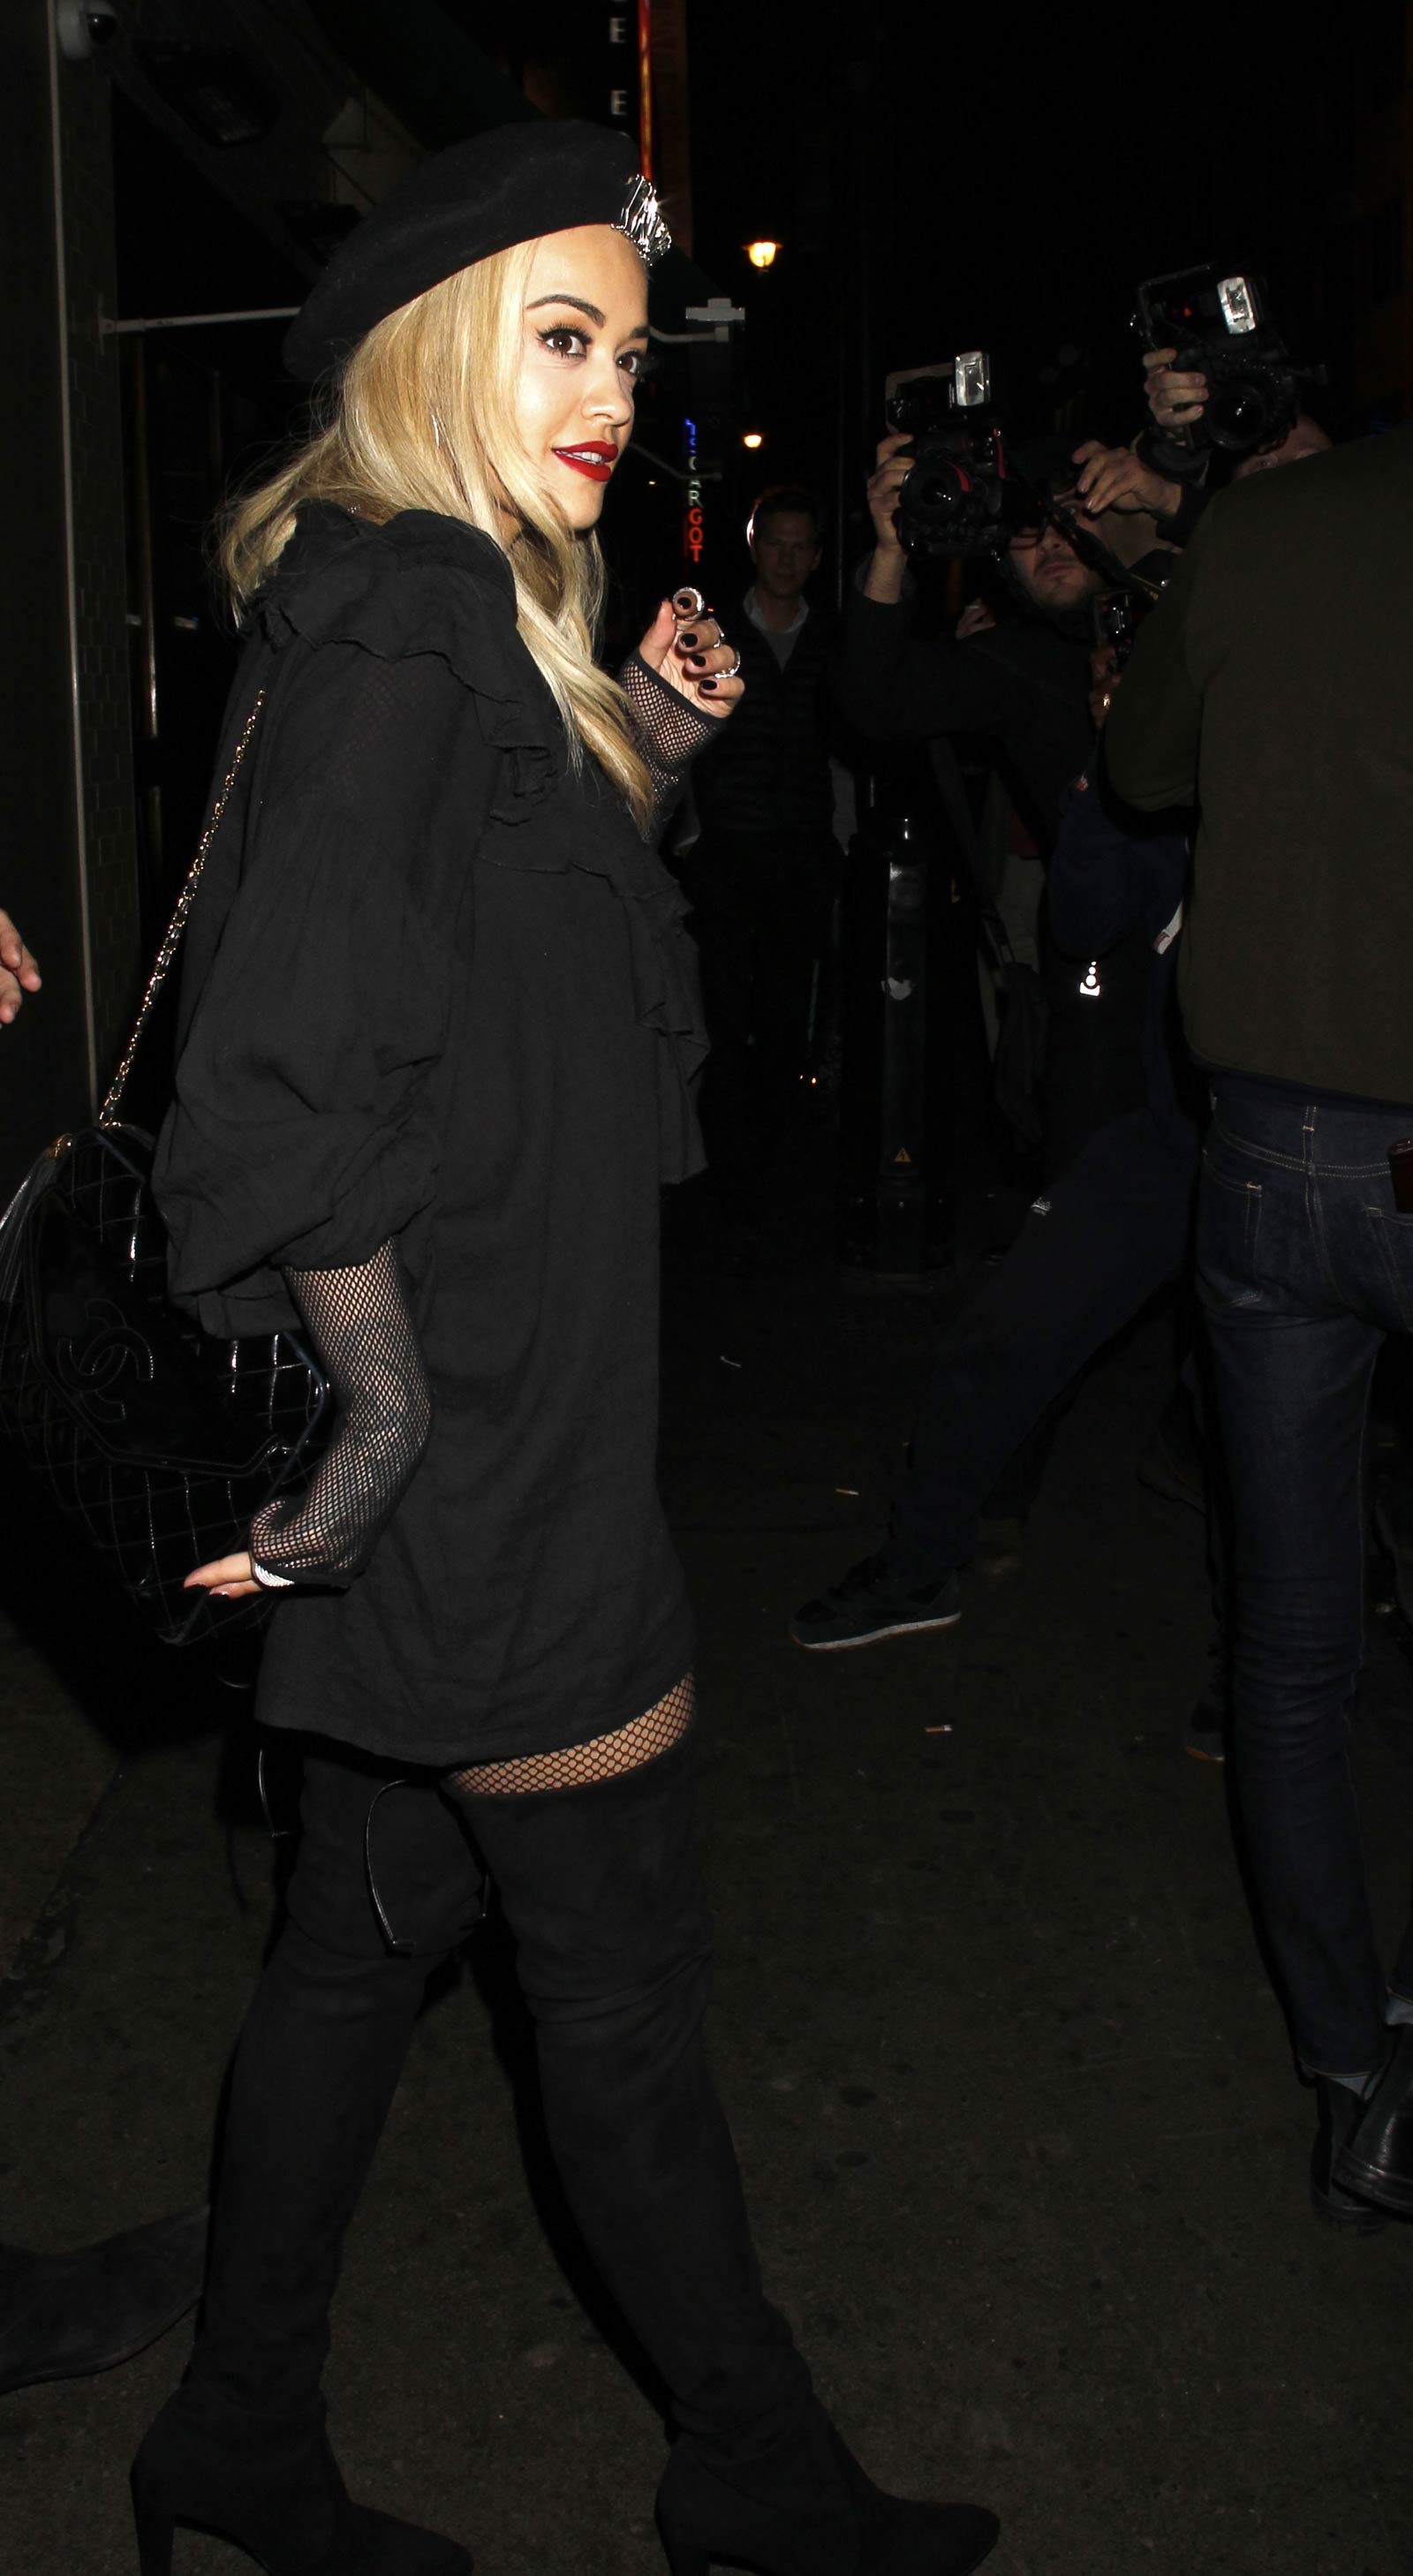 Rita Ora at Soho House private members club